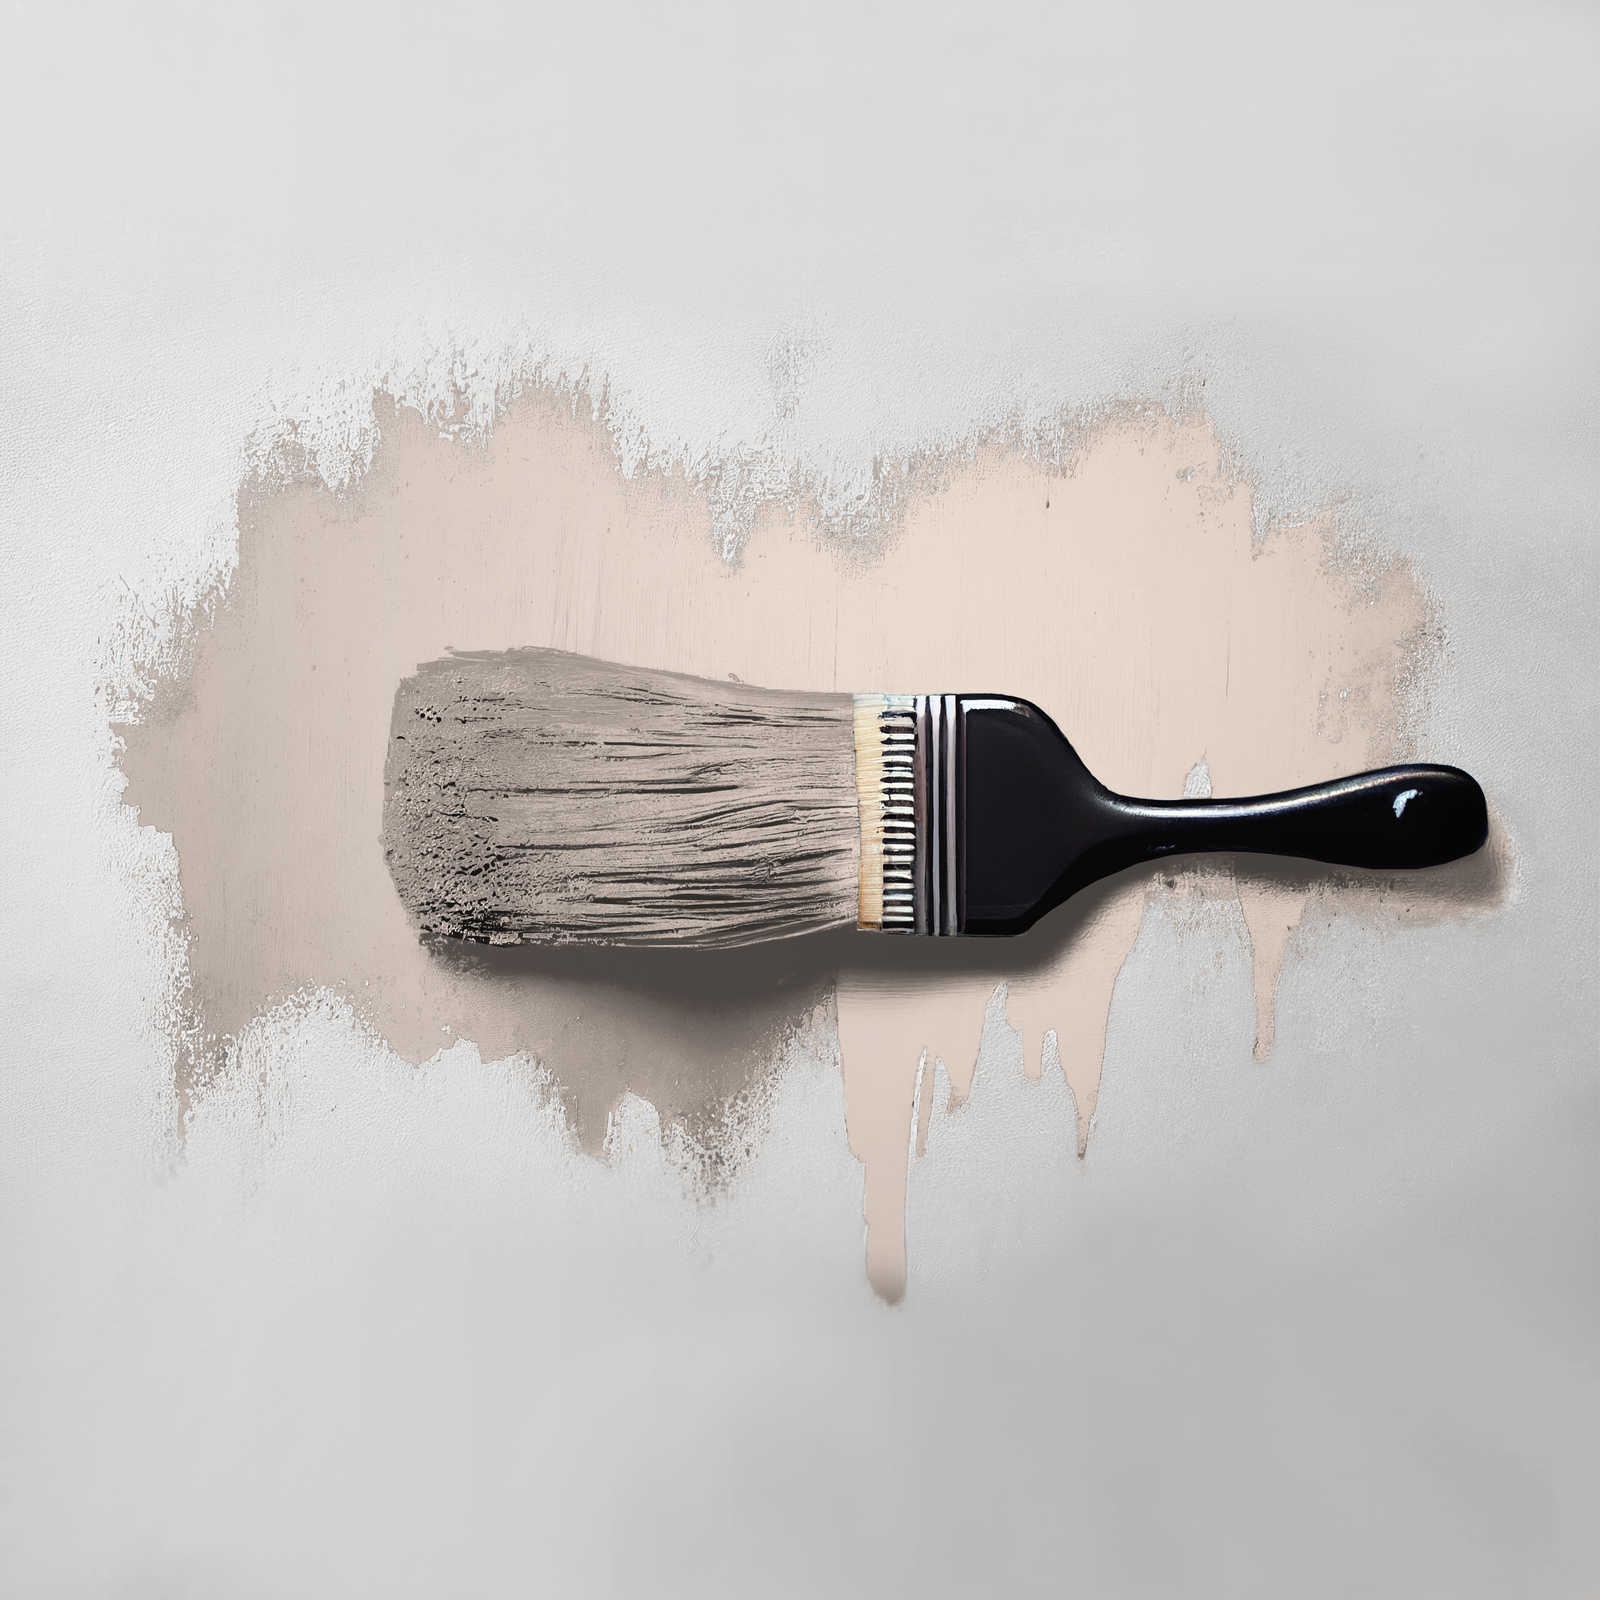             Pittura murale TCK7000 »Himalaya Salt« in bel beige – 2,5 litri
        